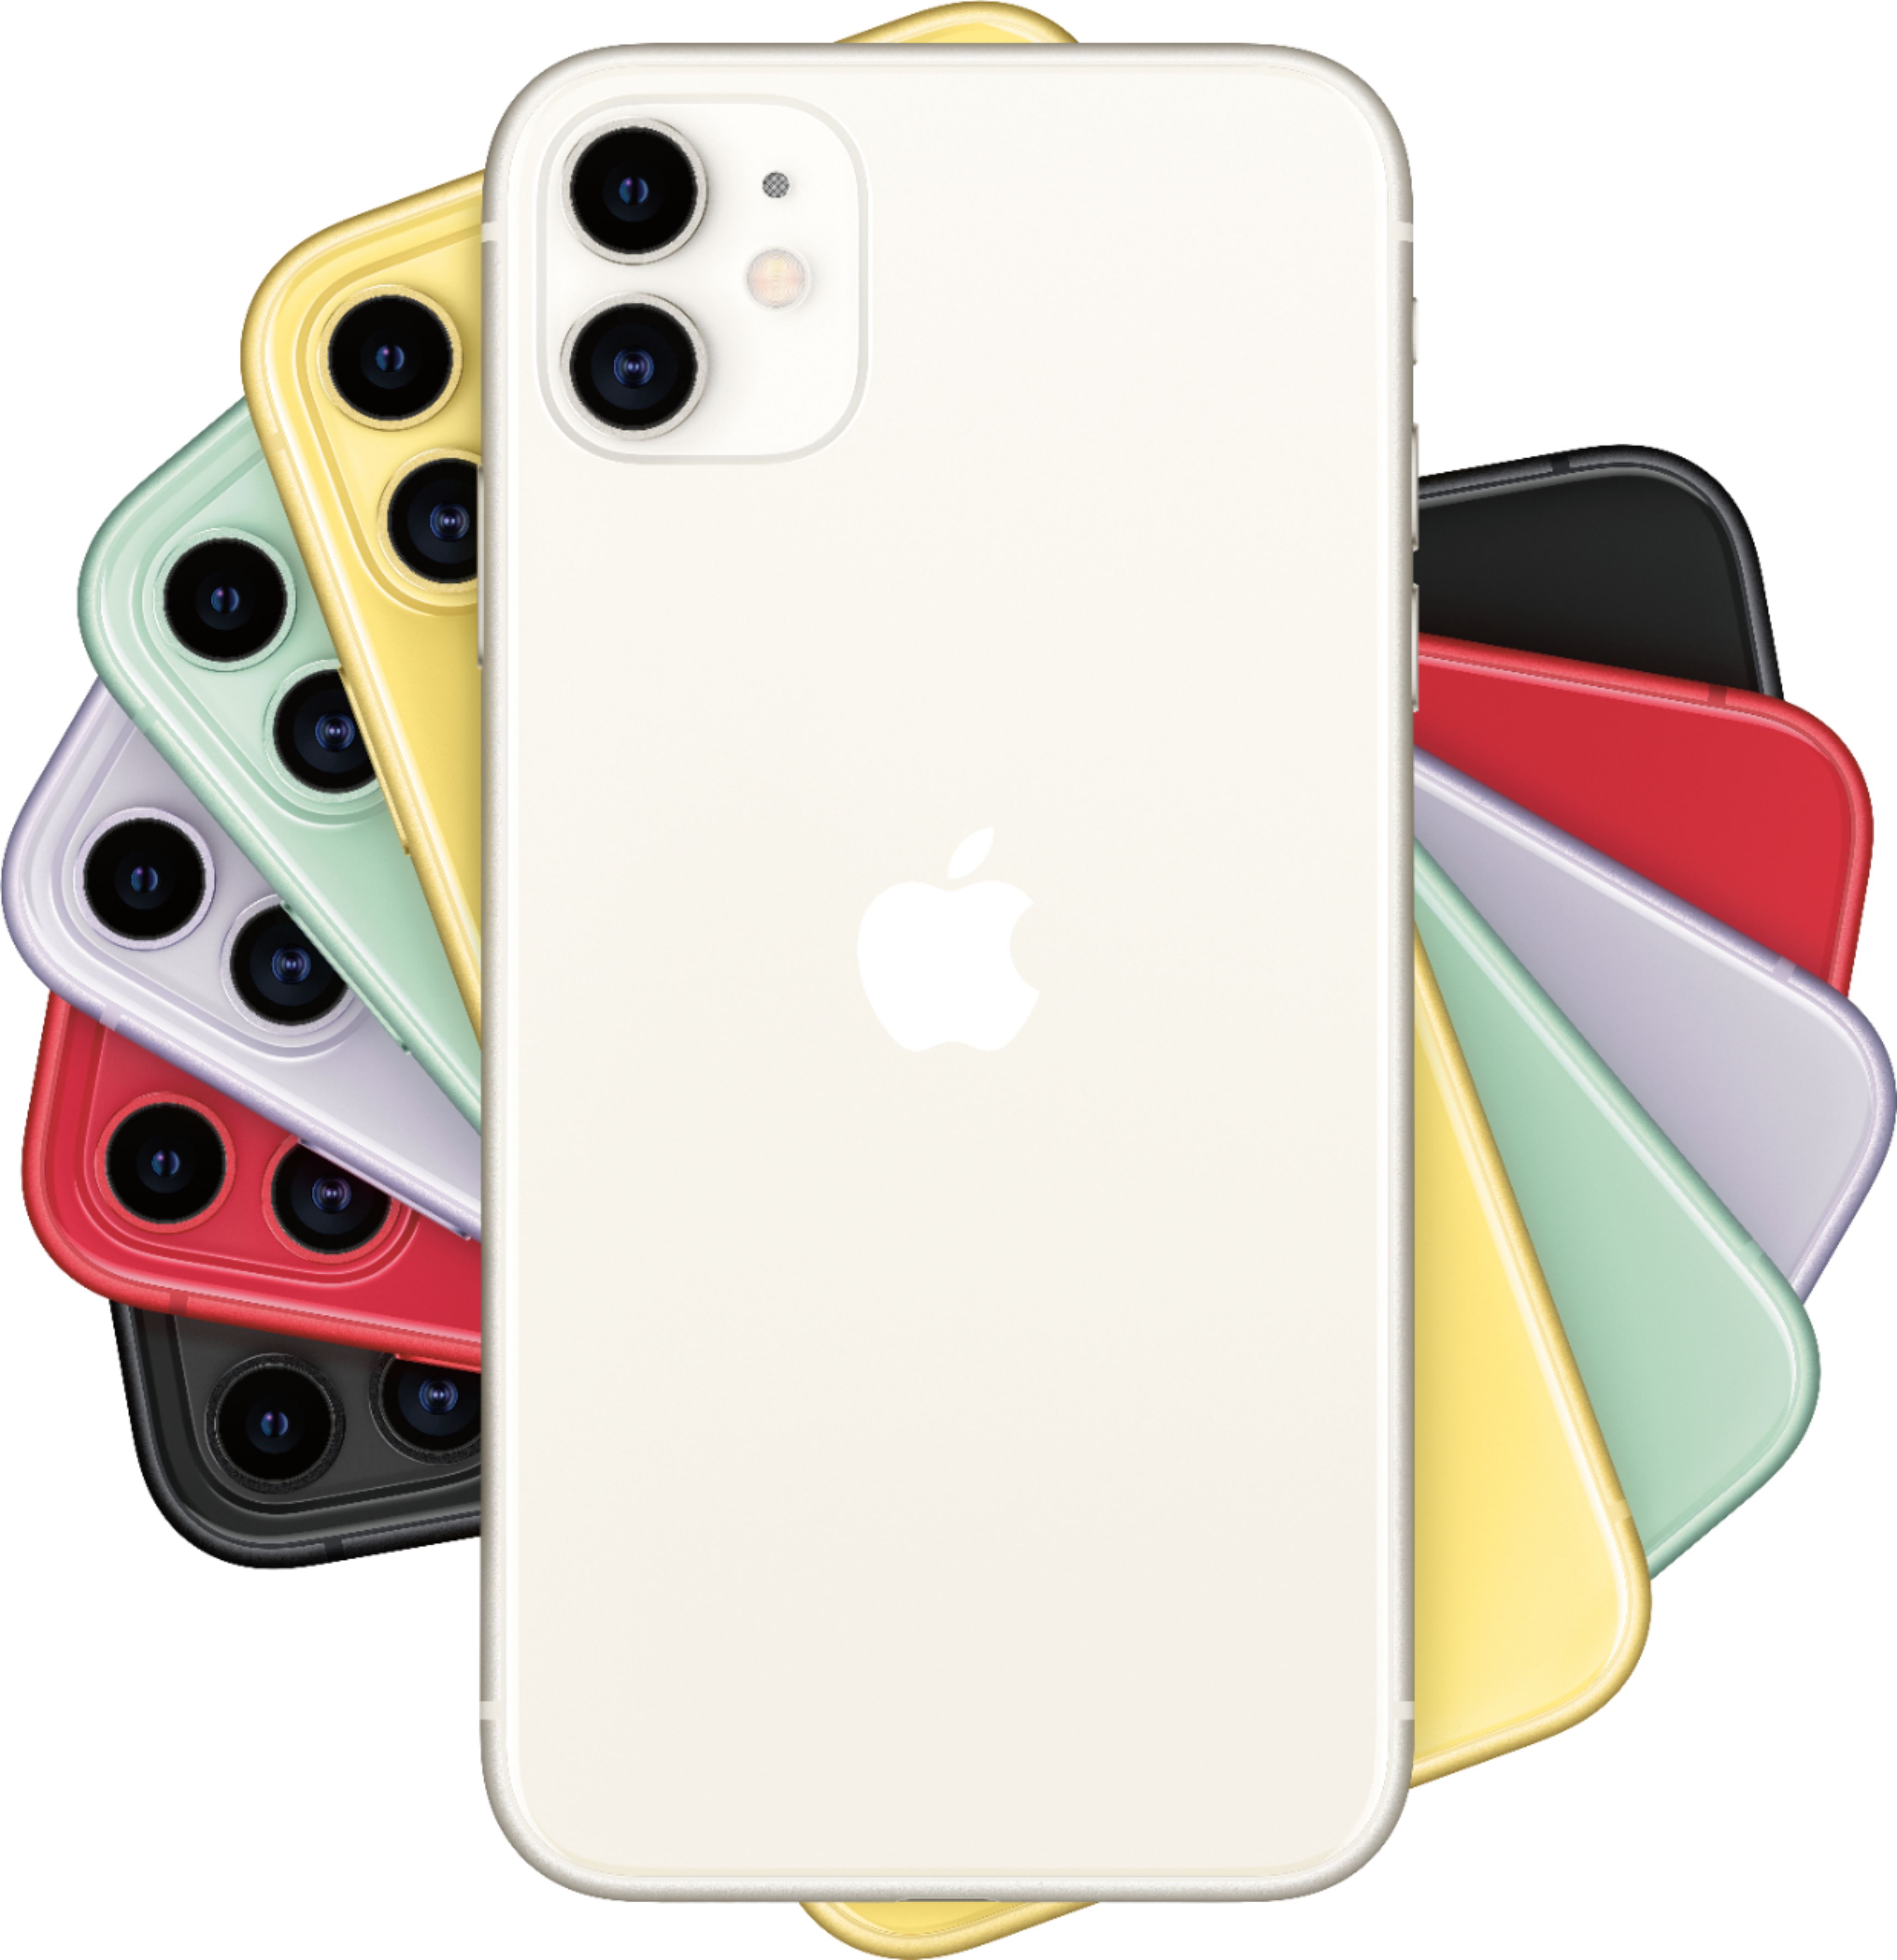 Apple iPhone 11 256GB (Unlocked) MWL22LL/A - Best Buy